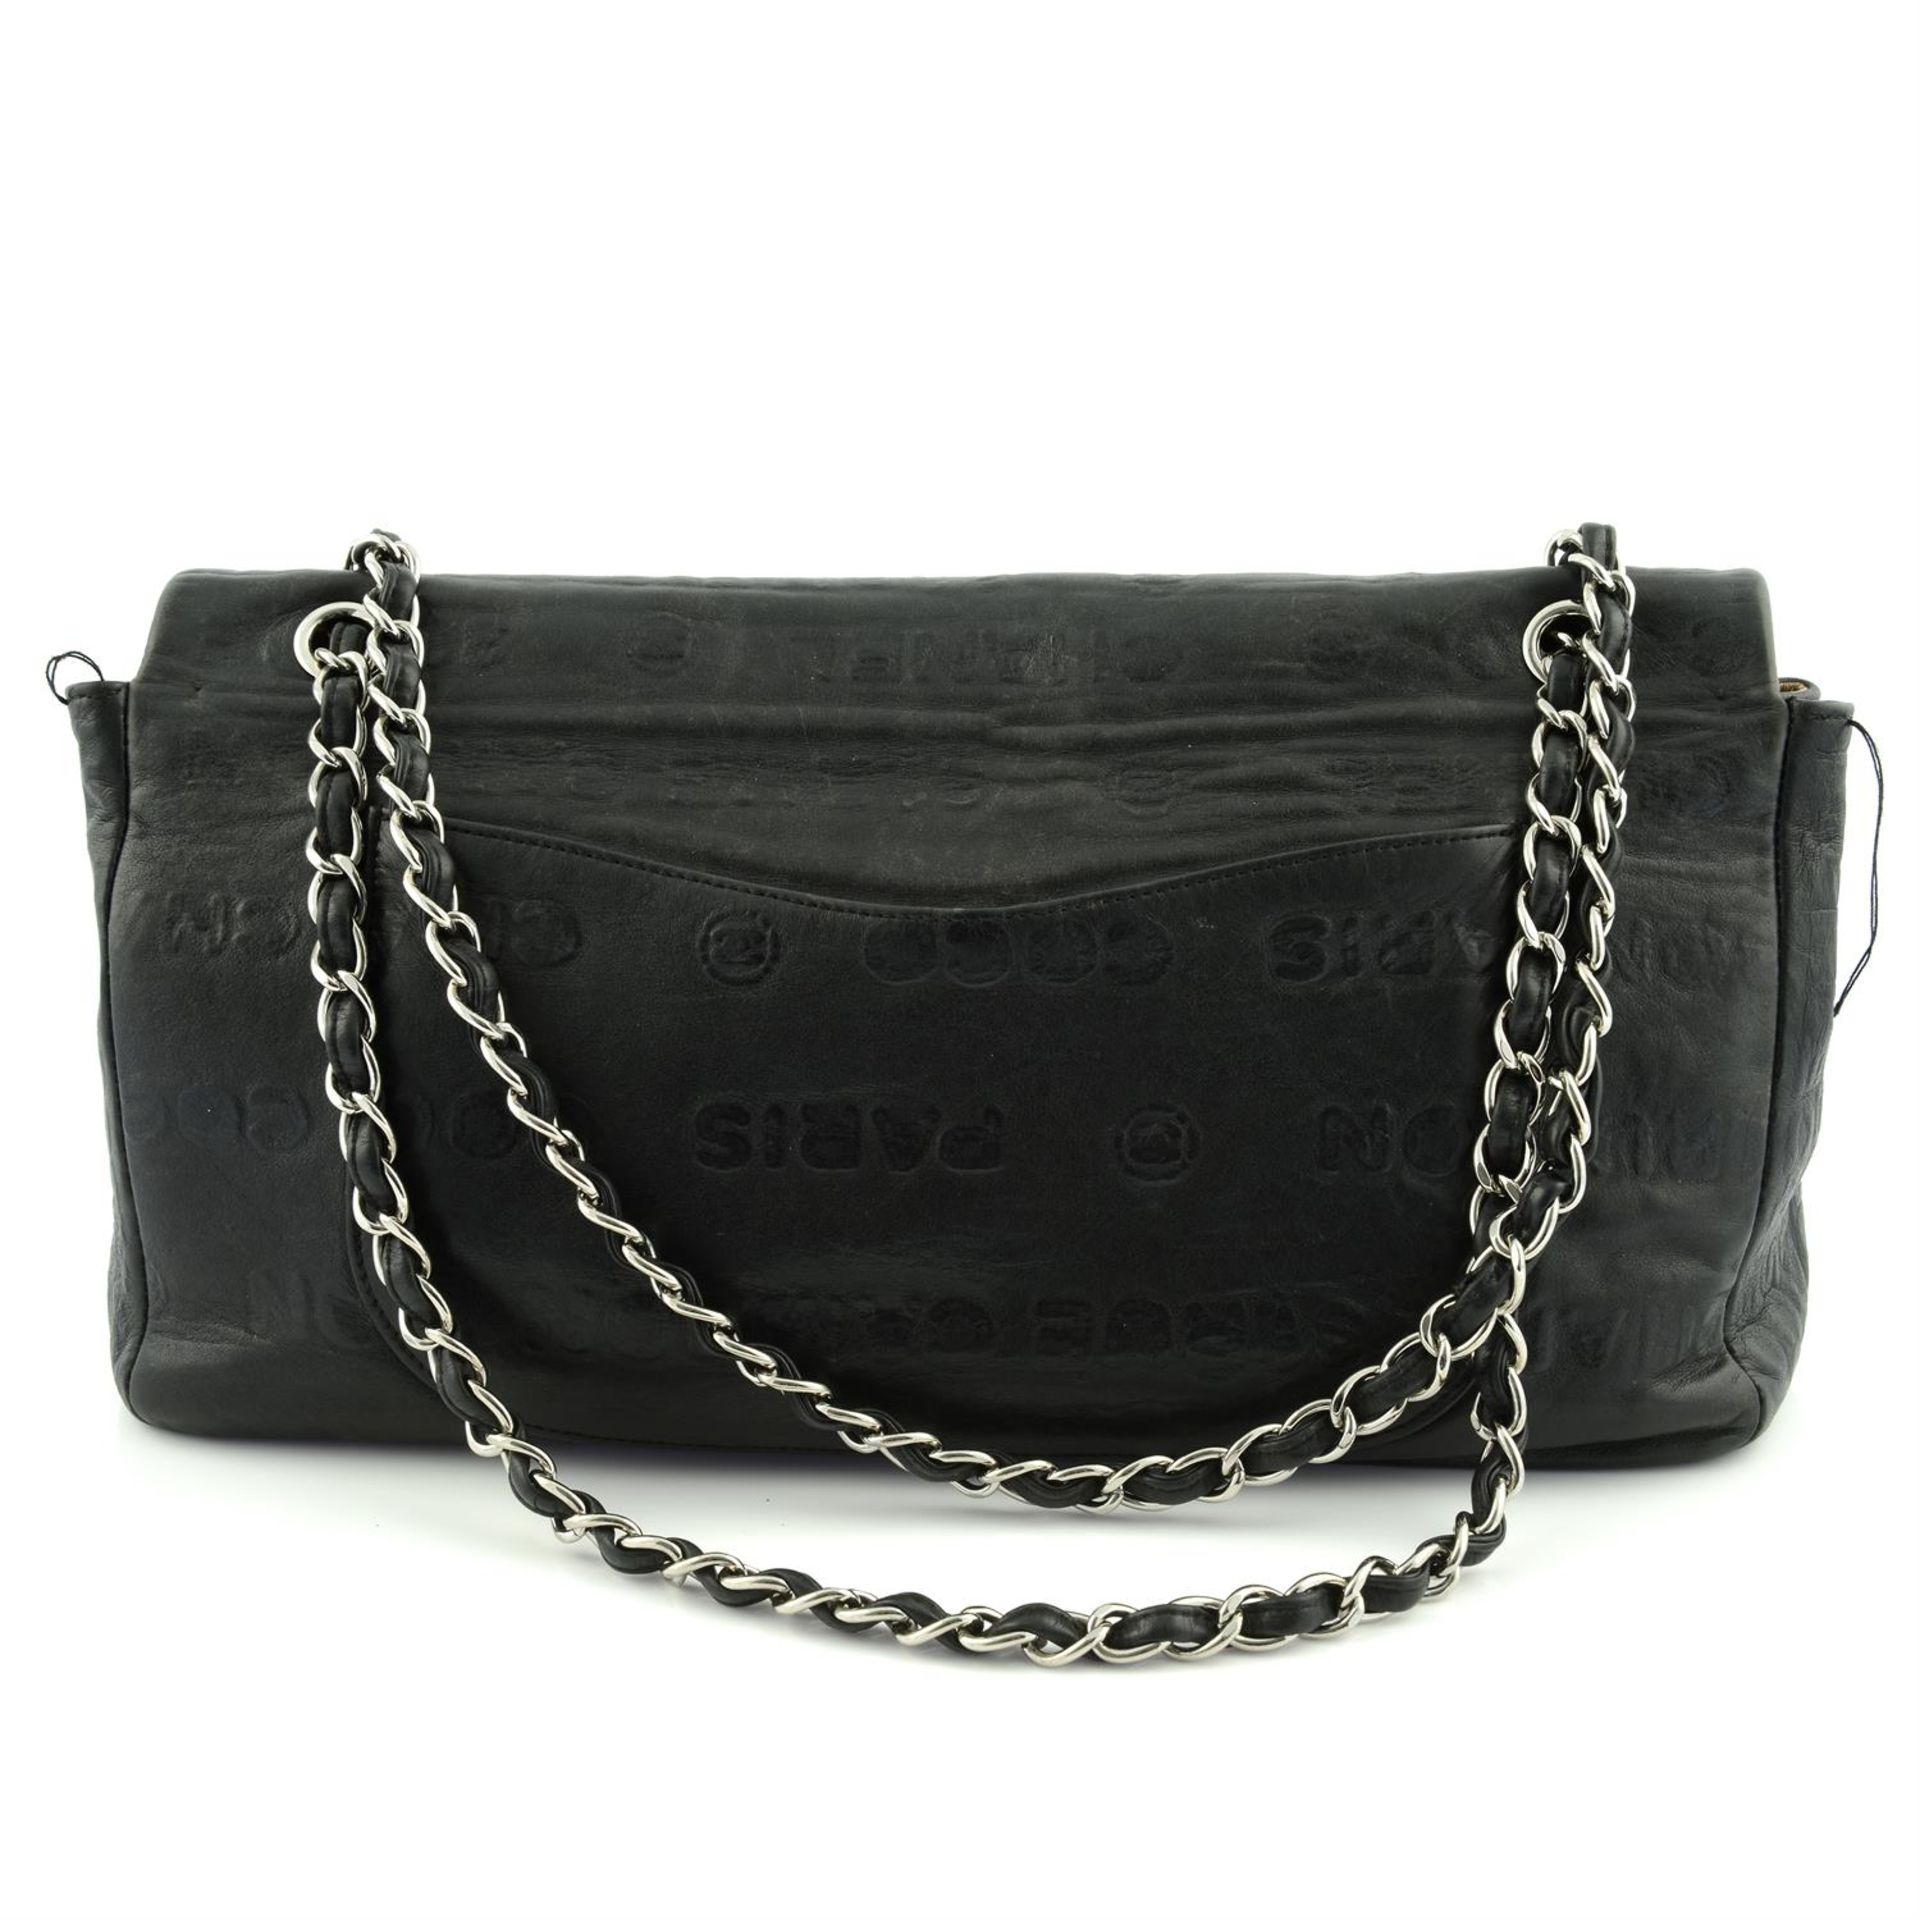 CHANEL - a black lambskin "31 Rue Cambon Paris" Reissue 2.55 double flap handbag. - Image 2 of 5